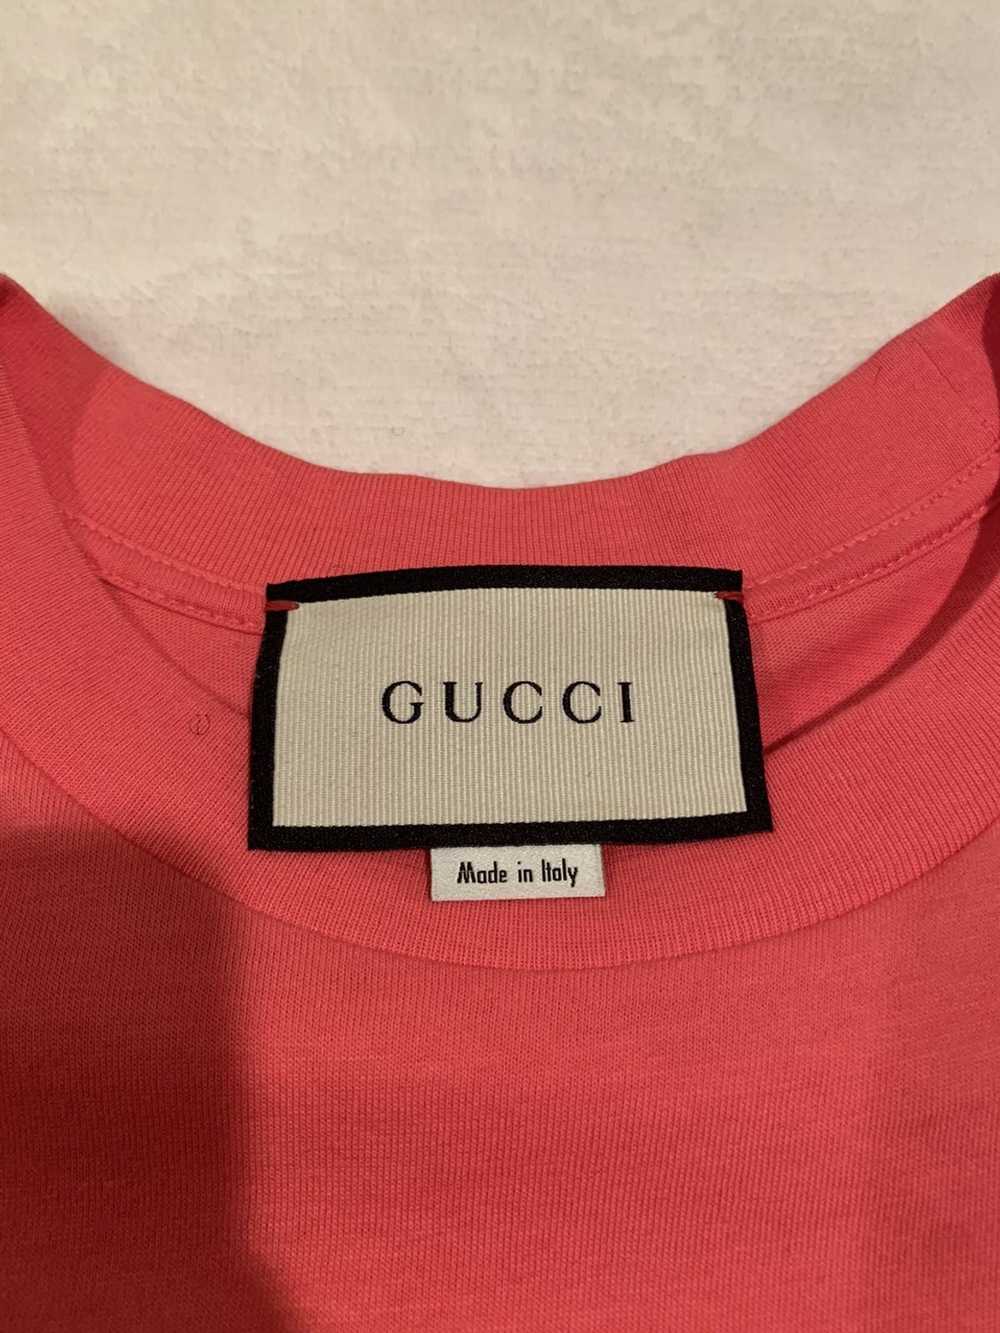 Gucci Gucci t shirt - image 2